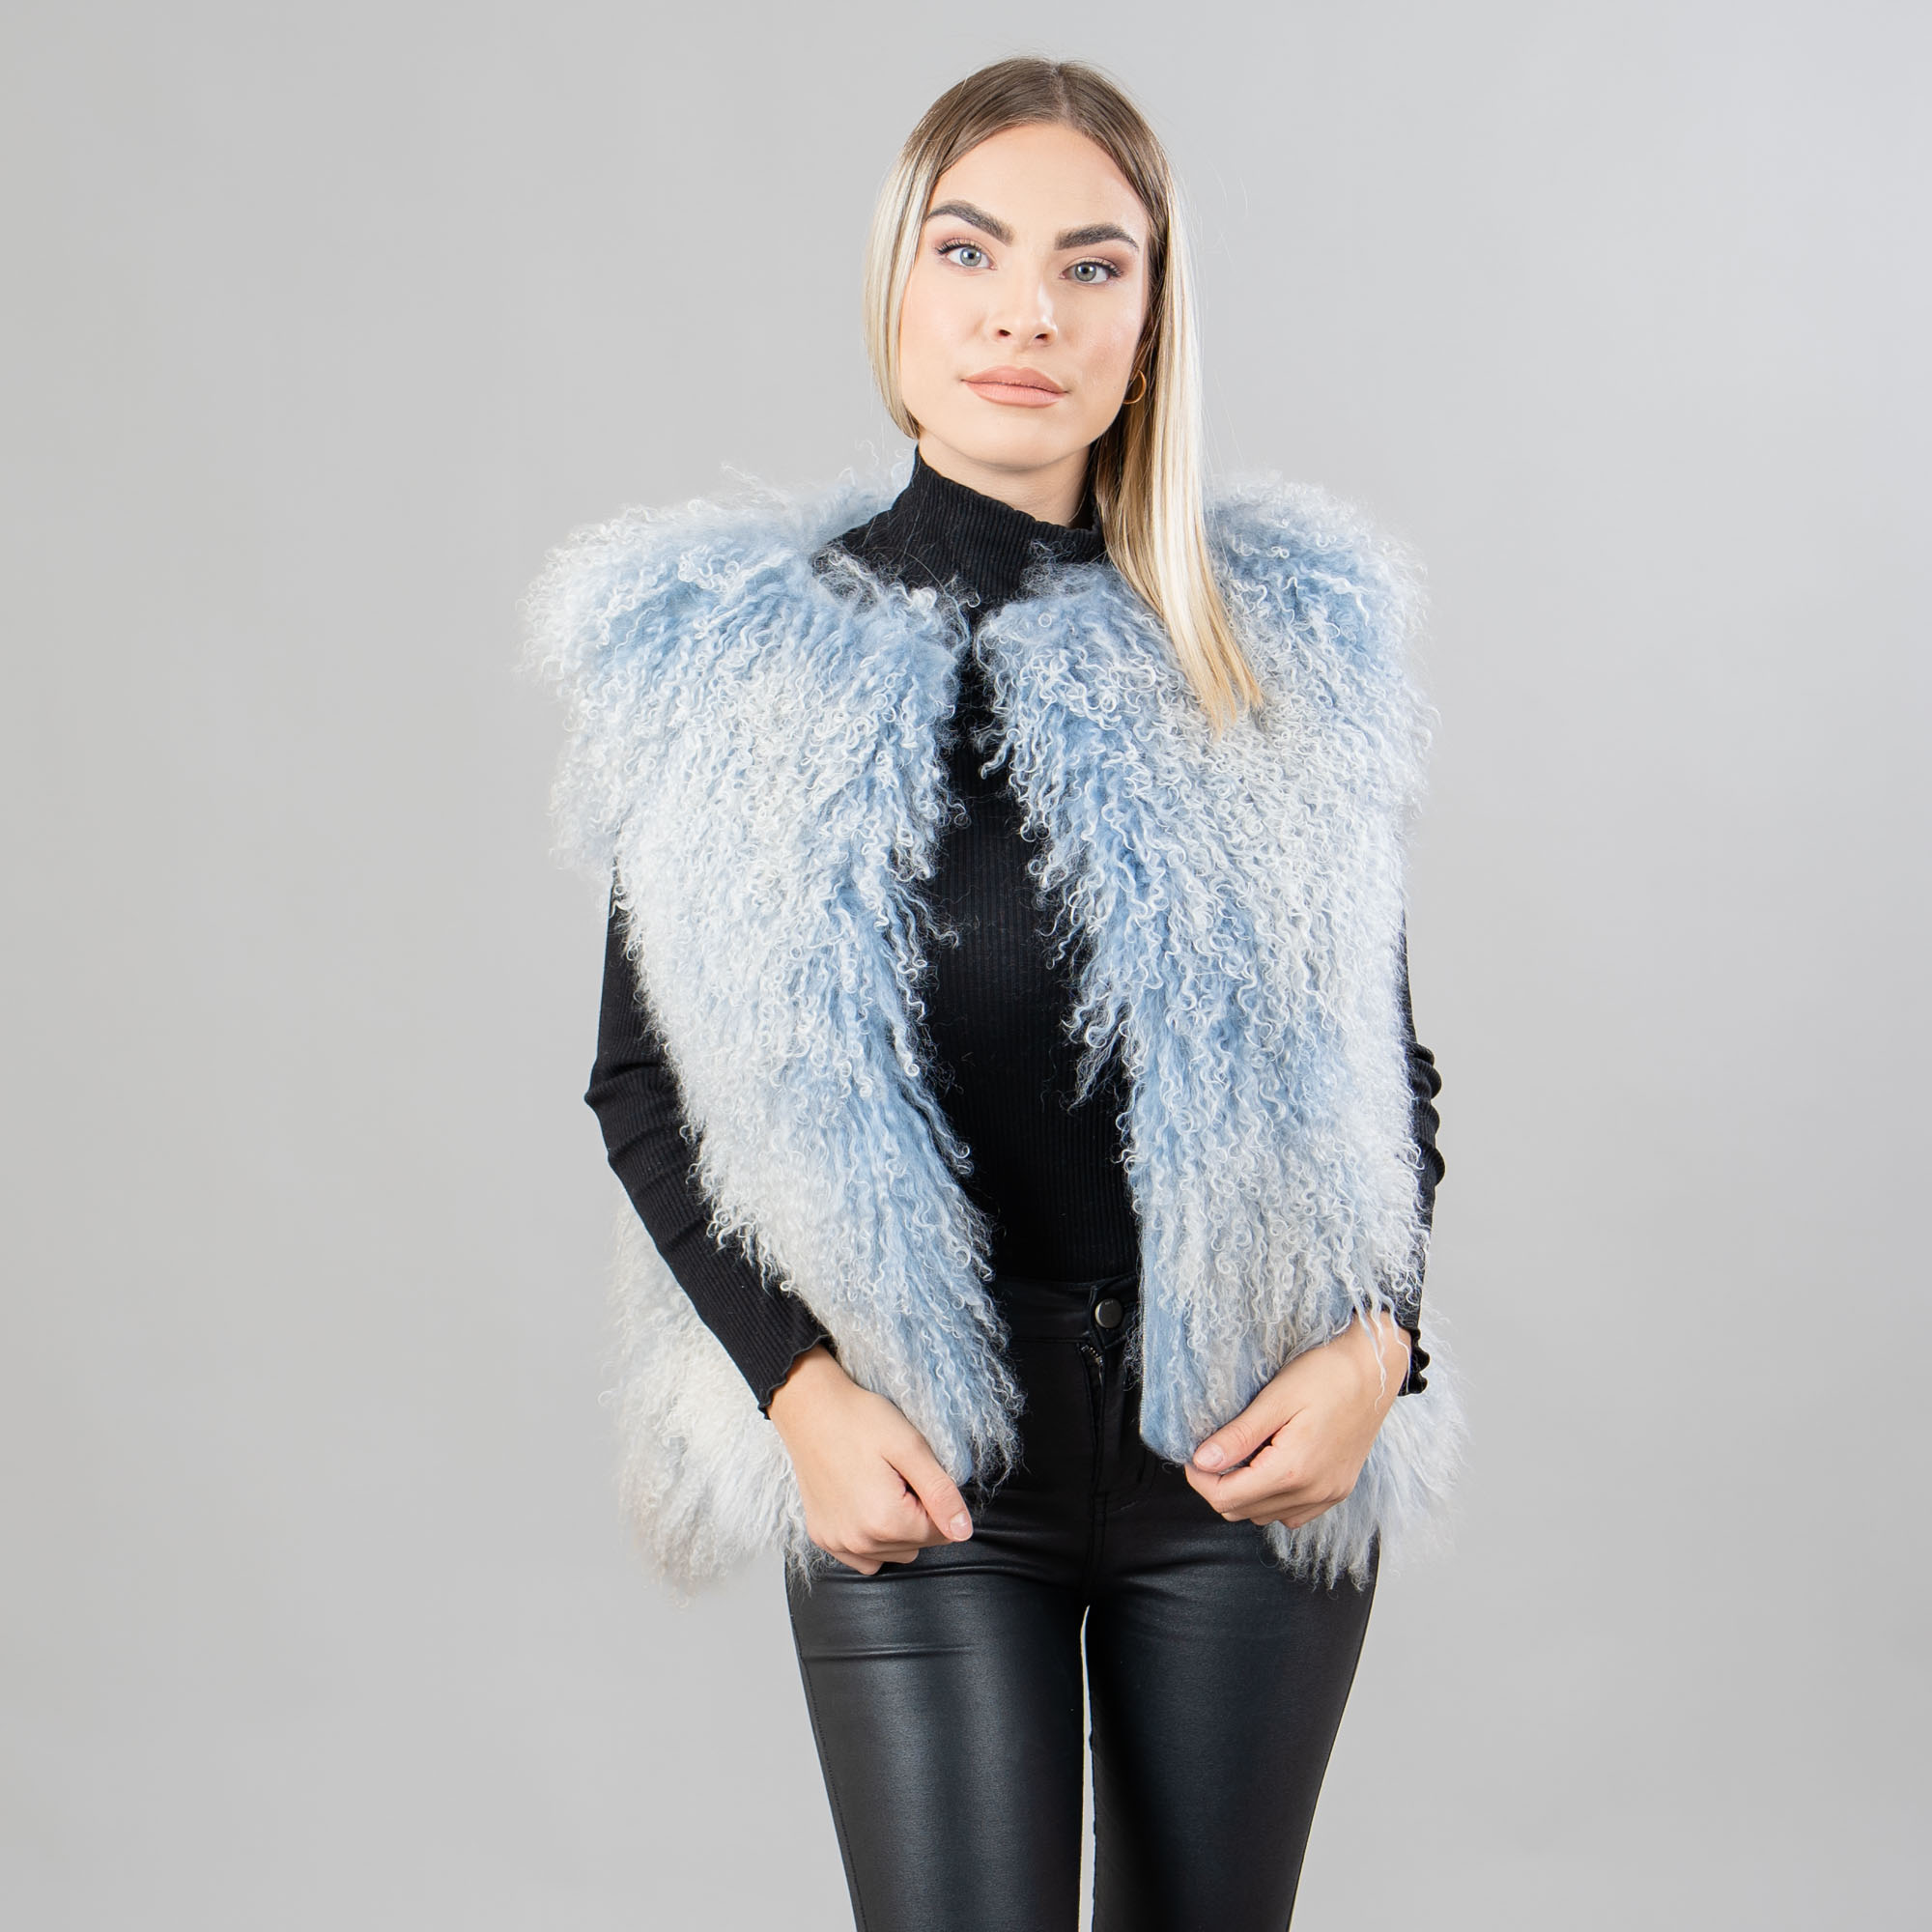 Mongolian sheep fur vest in blue color